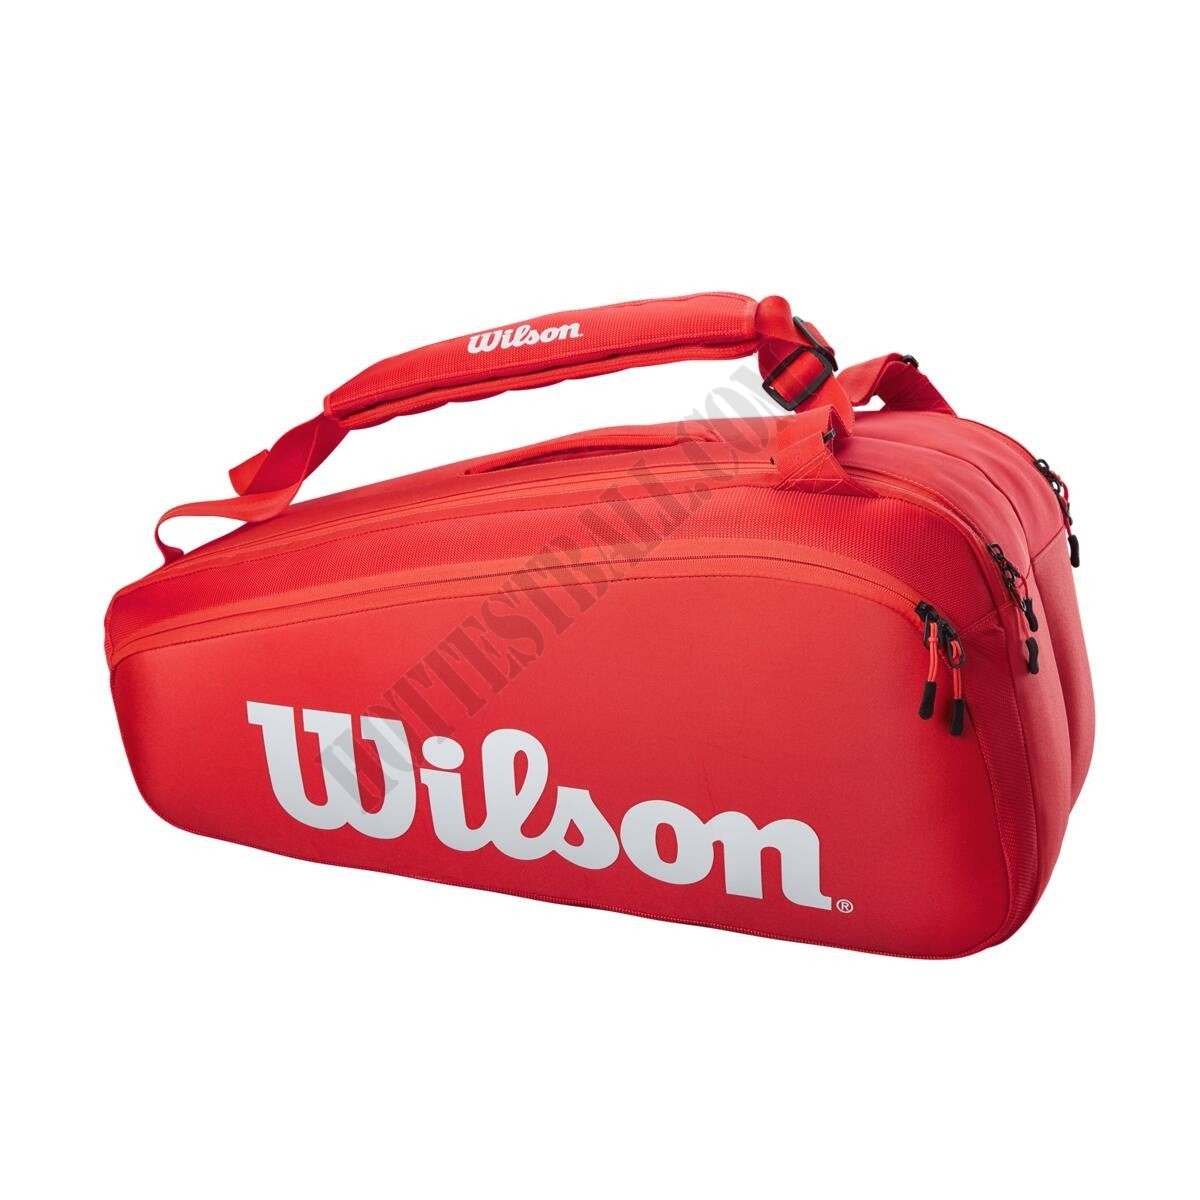 Super Tour 9 Pack Bag - Wilson Discount Store - -1